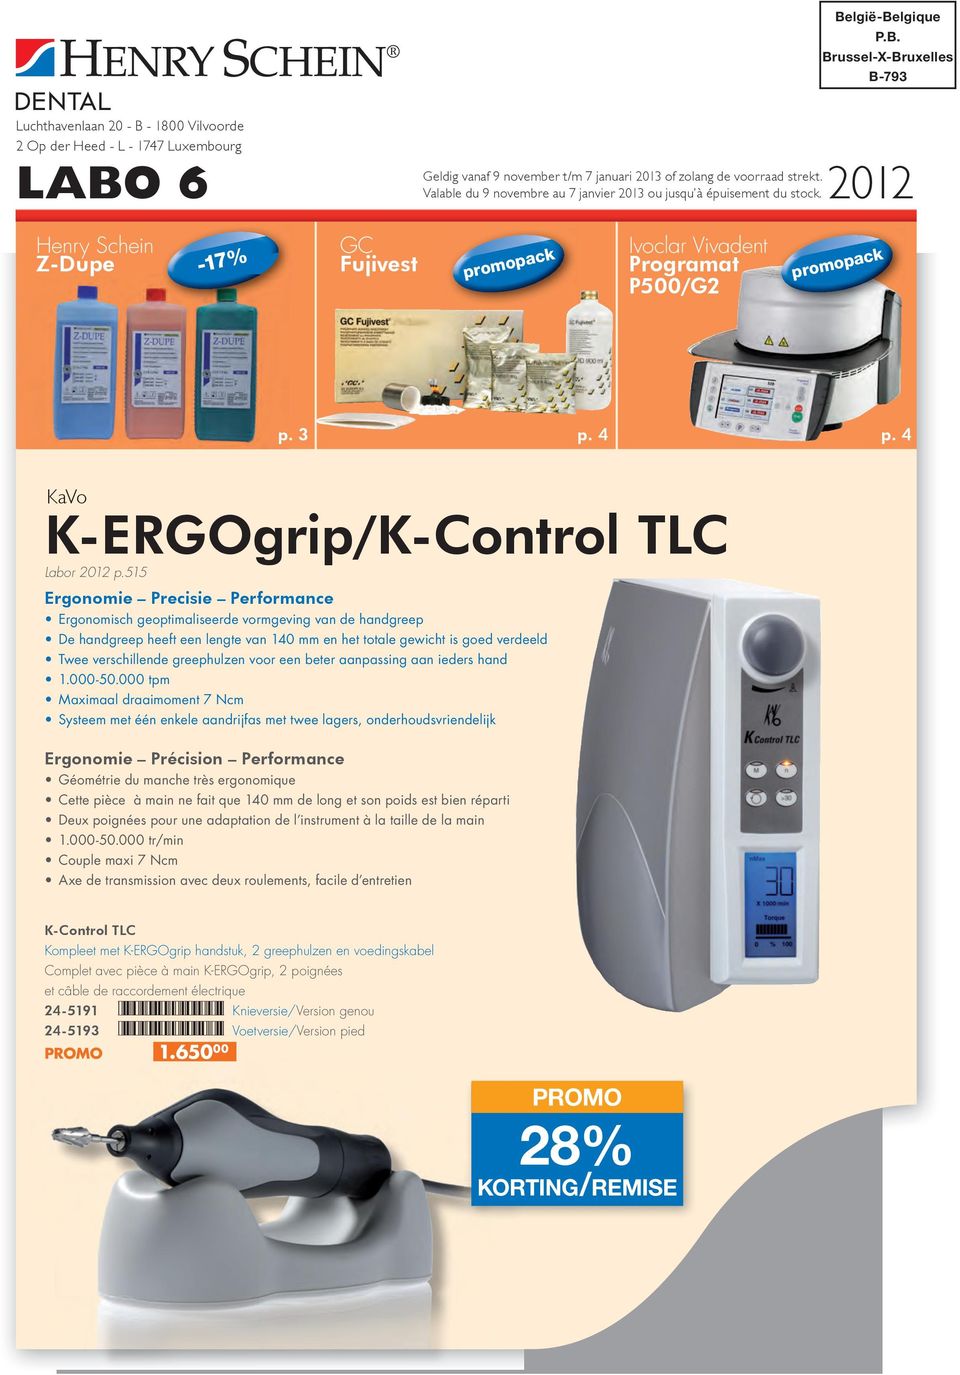 4 KaVo K-ERGOgrip/K-Control TLC Labor 2012 p.